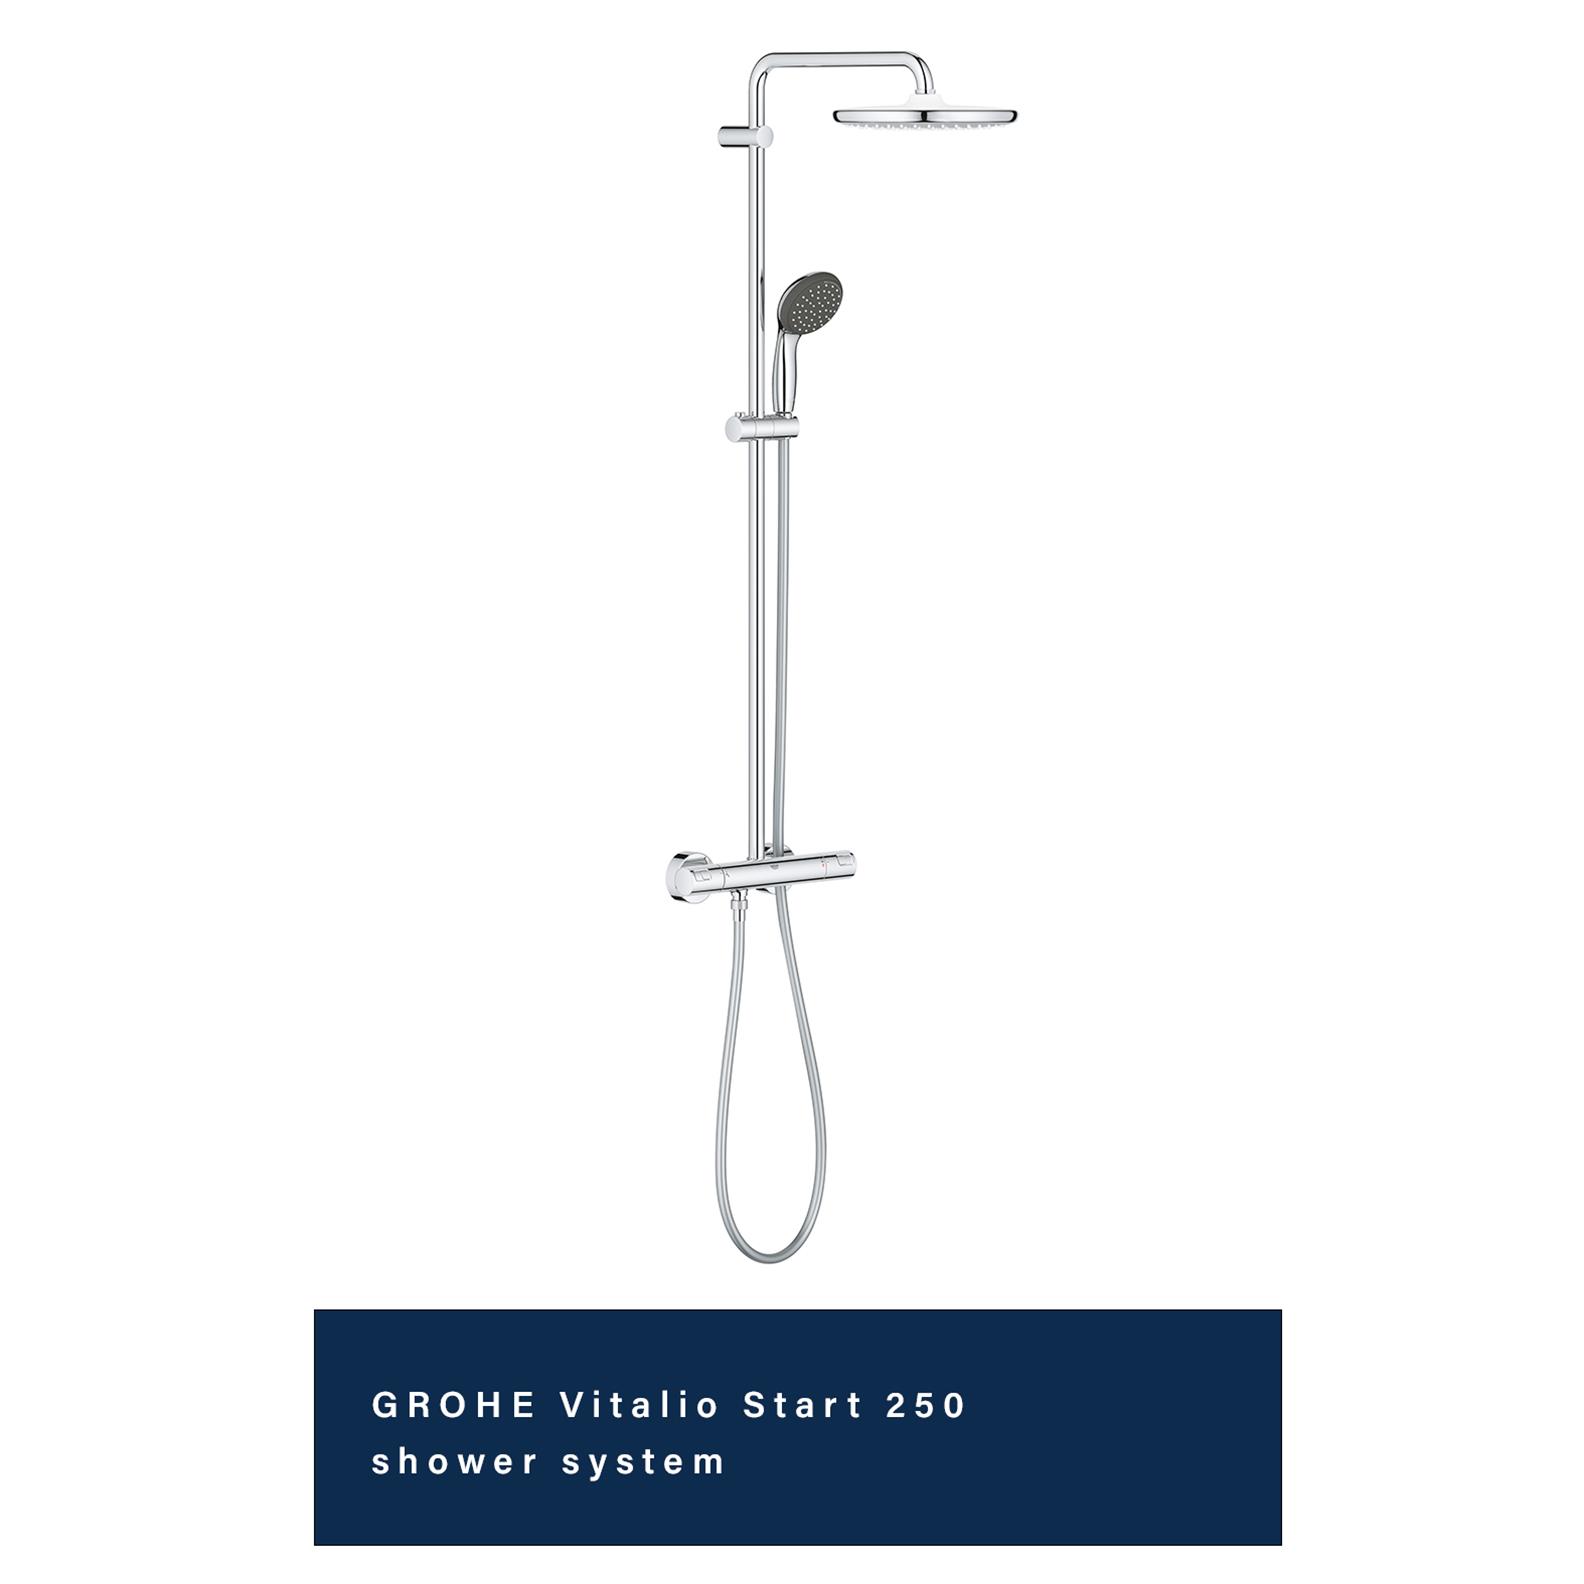 GROHE Vitalio Start 250 shower system